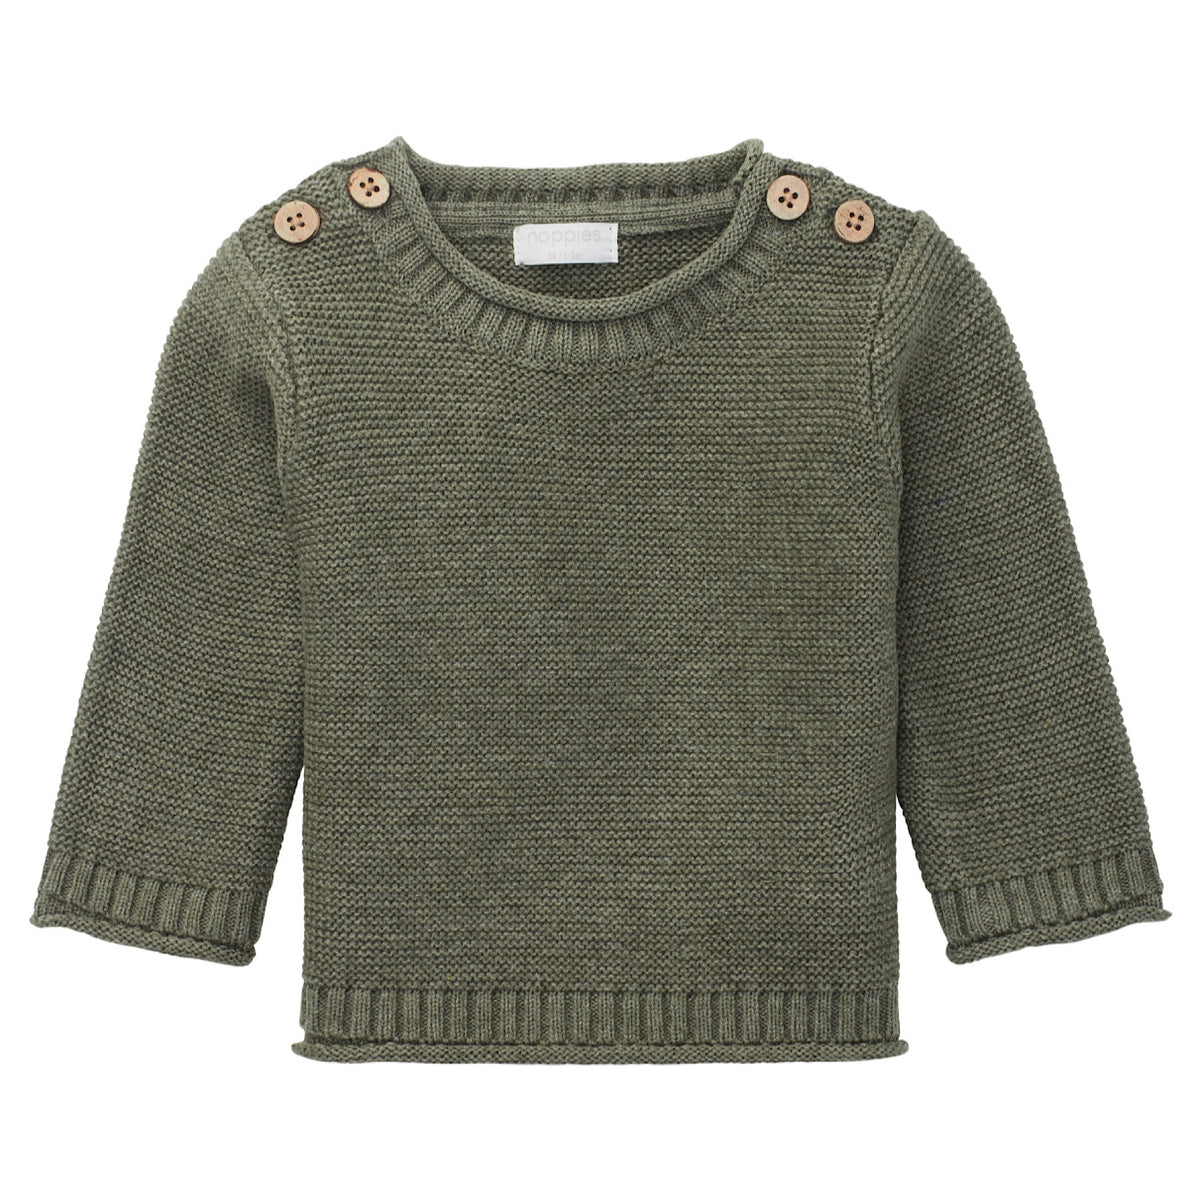 Knit Green Organic Cotton Sweater